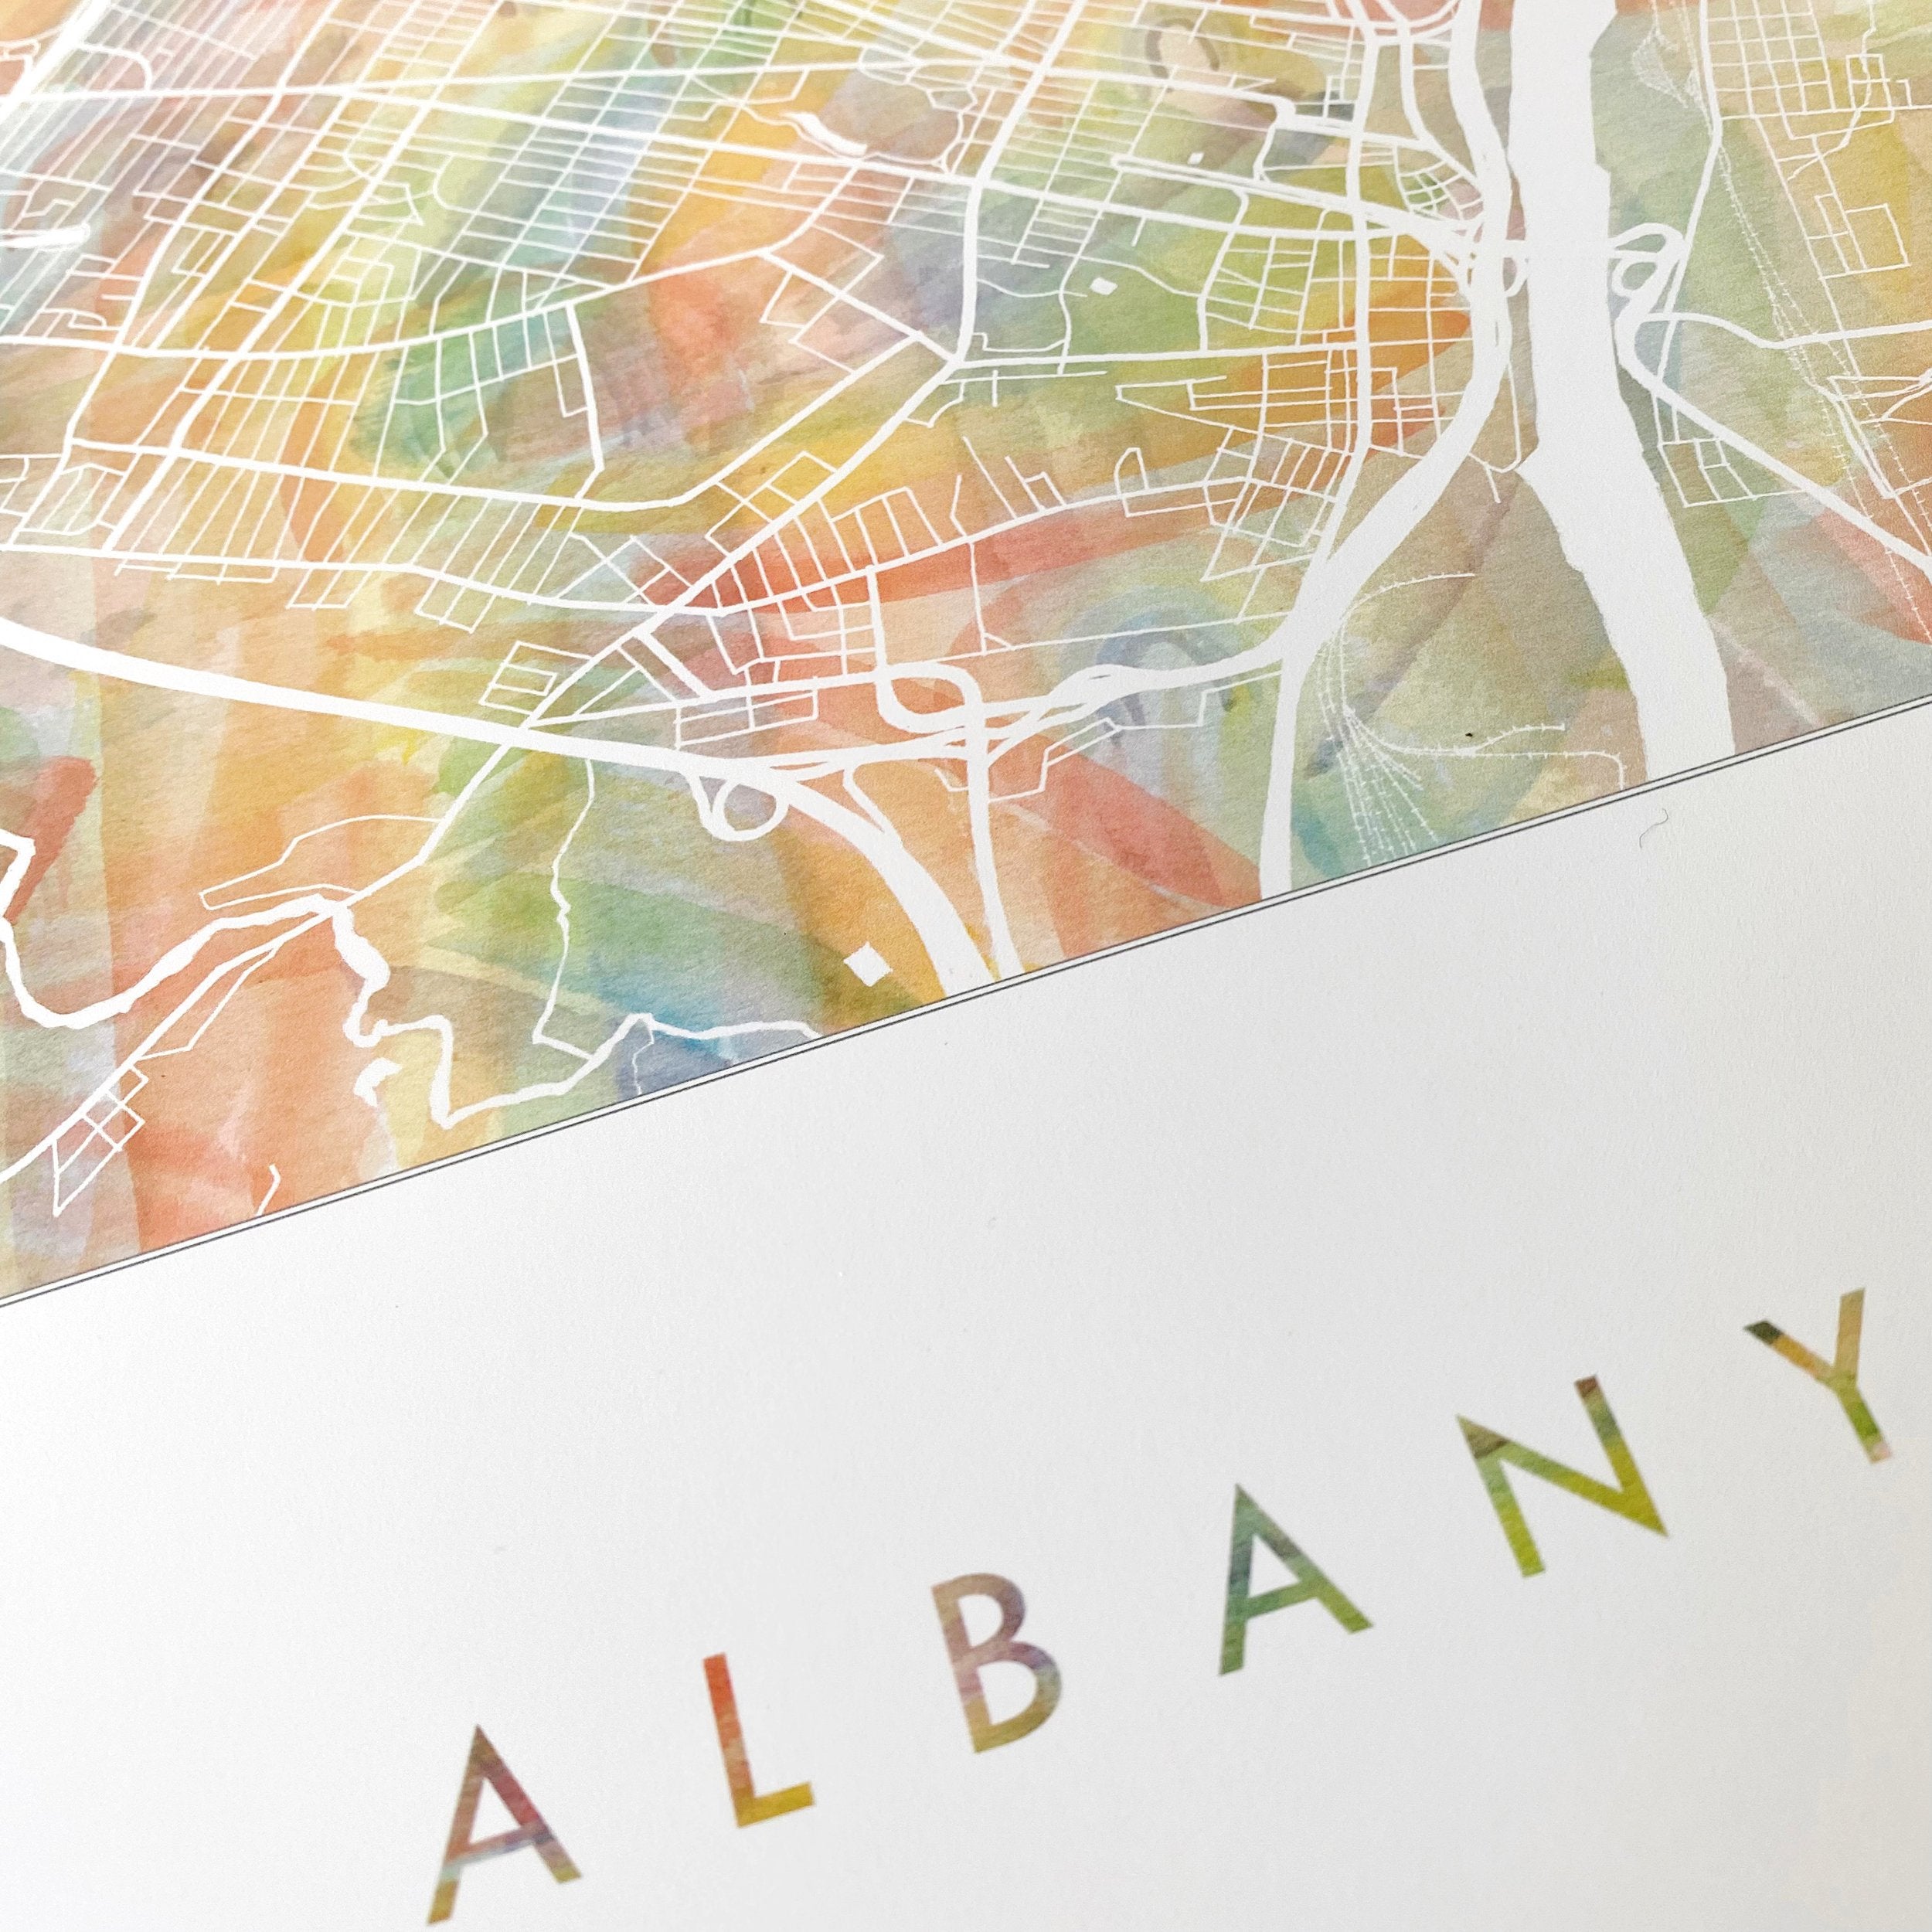 ALBANY Pride Rainbow Watercolor Map: PRINT